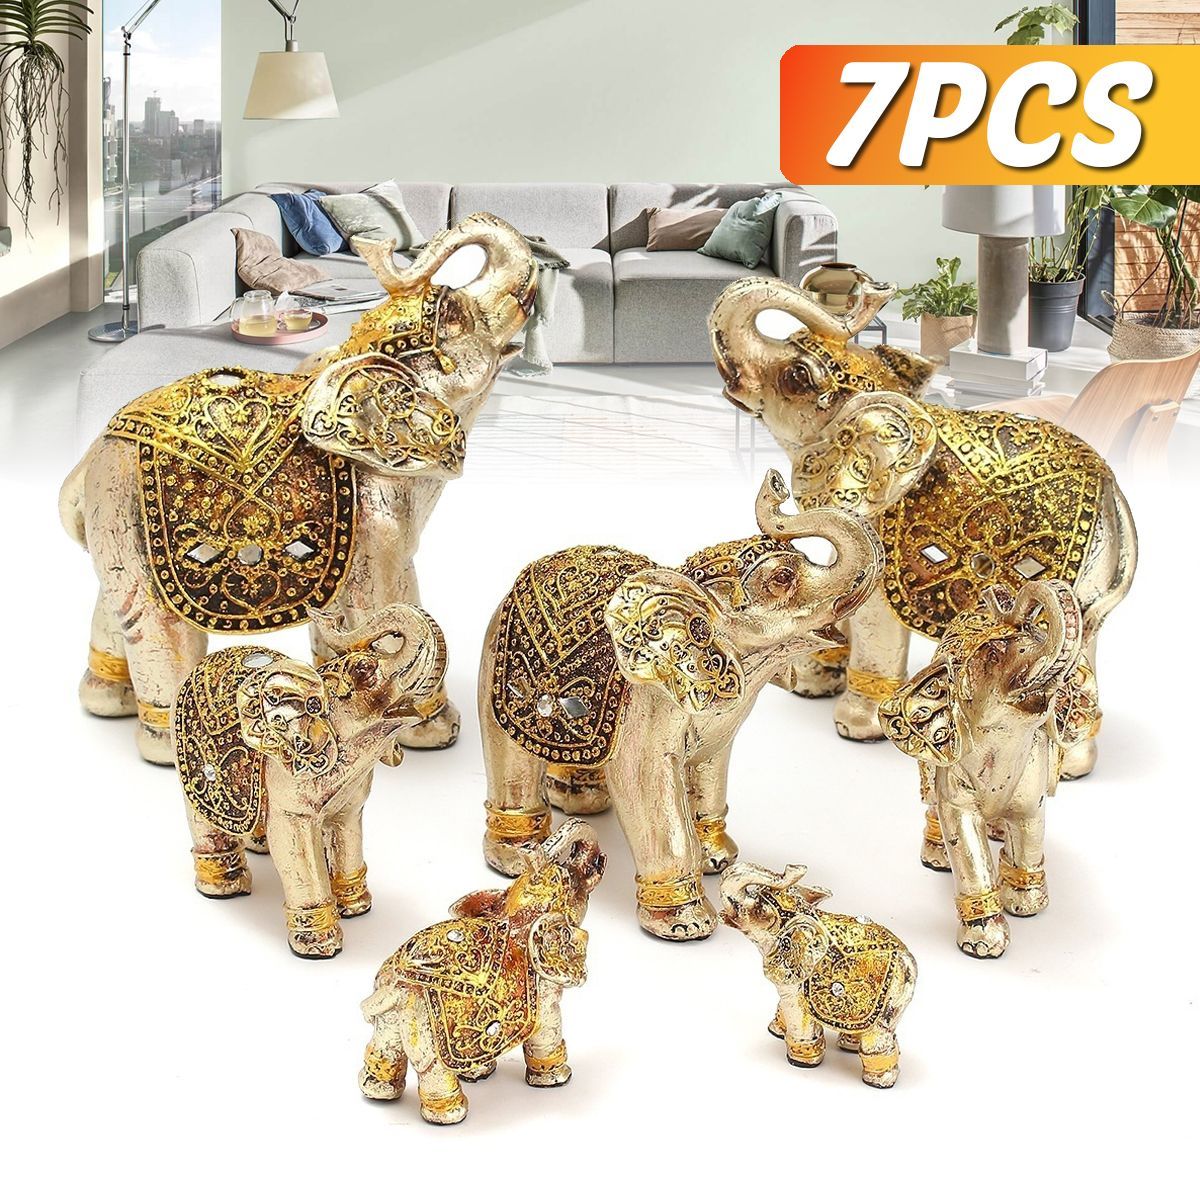 7Pcs-Feng-Shui-Golden-Elephant-Statue-Lucky-Wealth-Figurine-Gift-Home-Decor-1690816